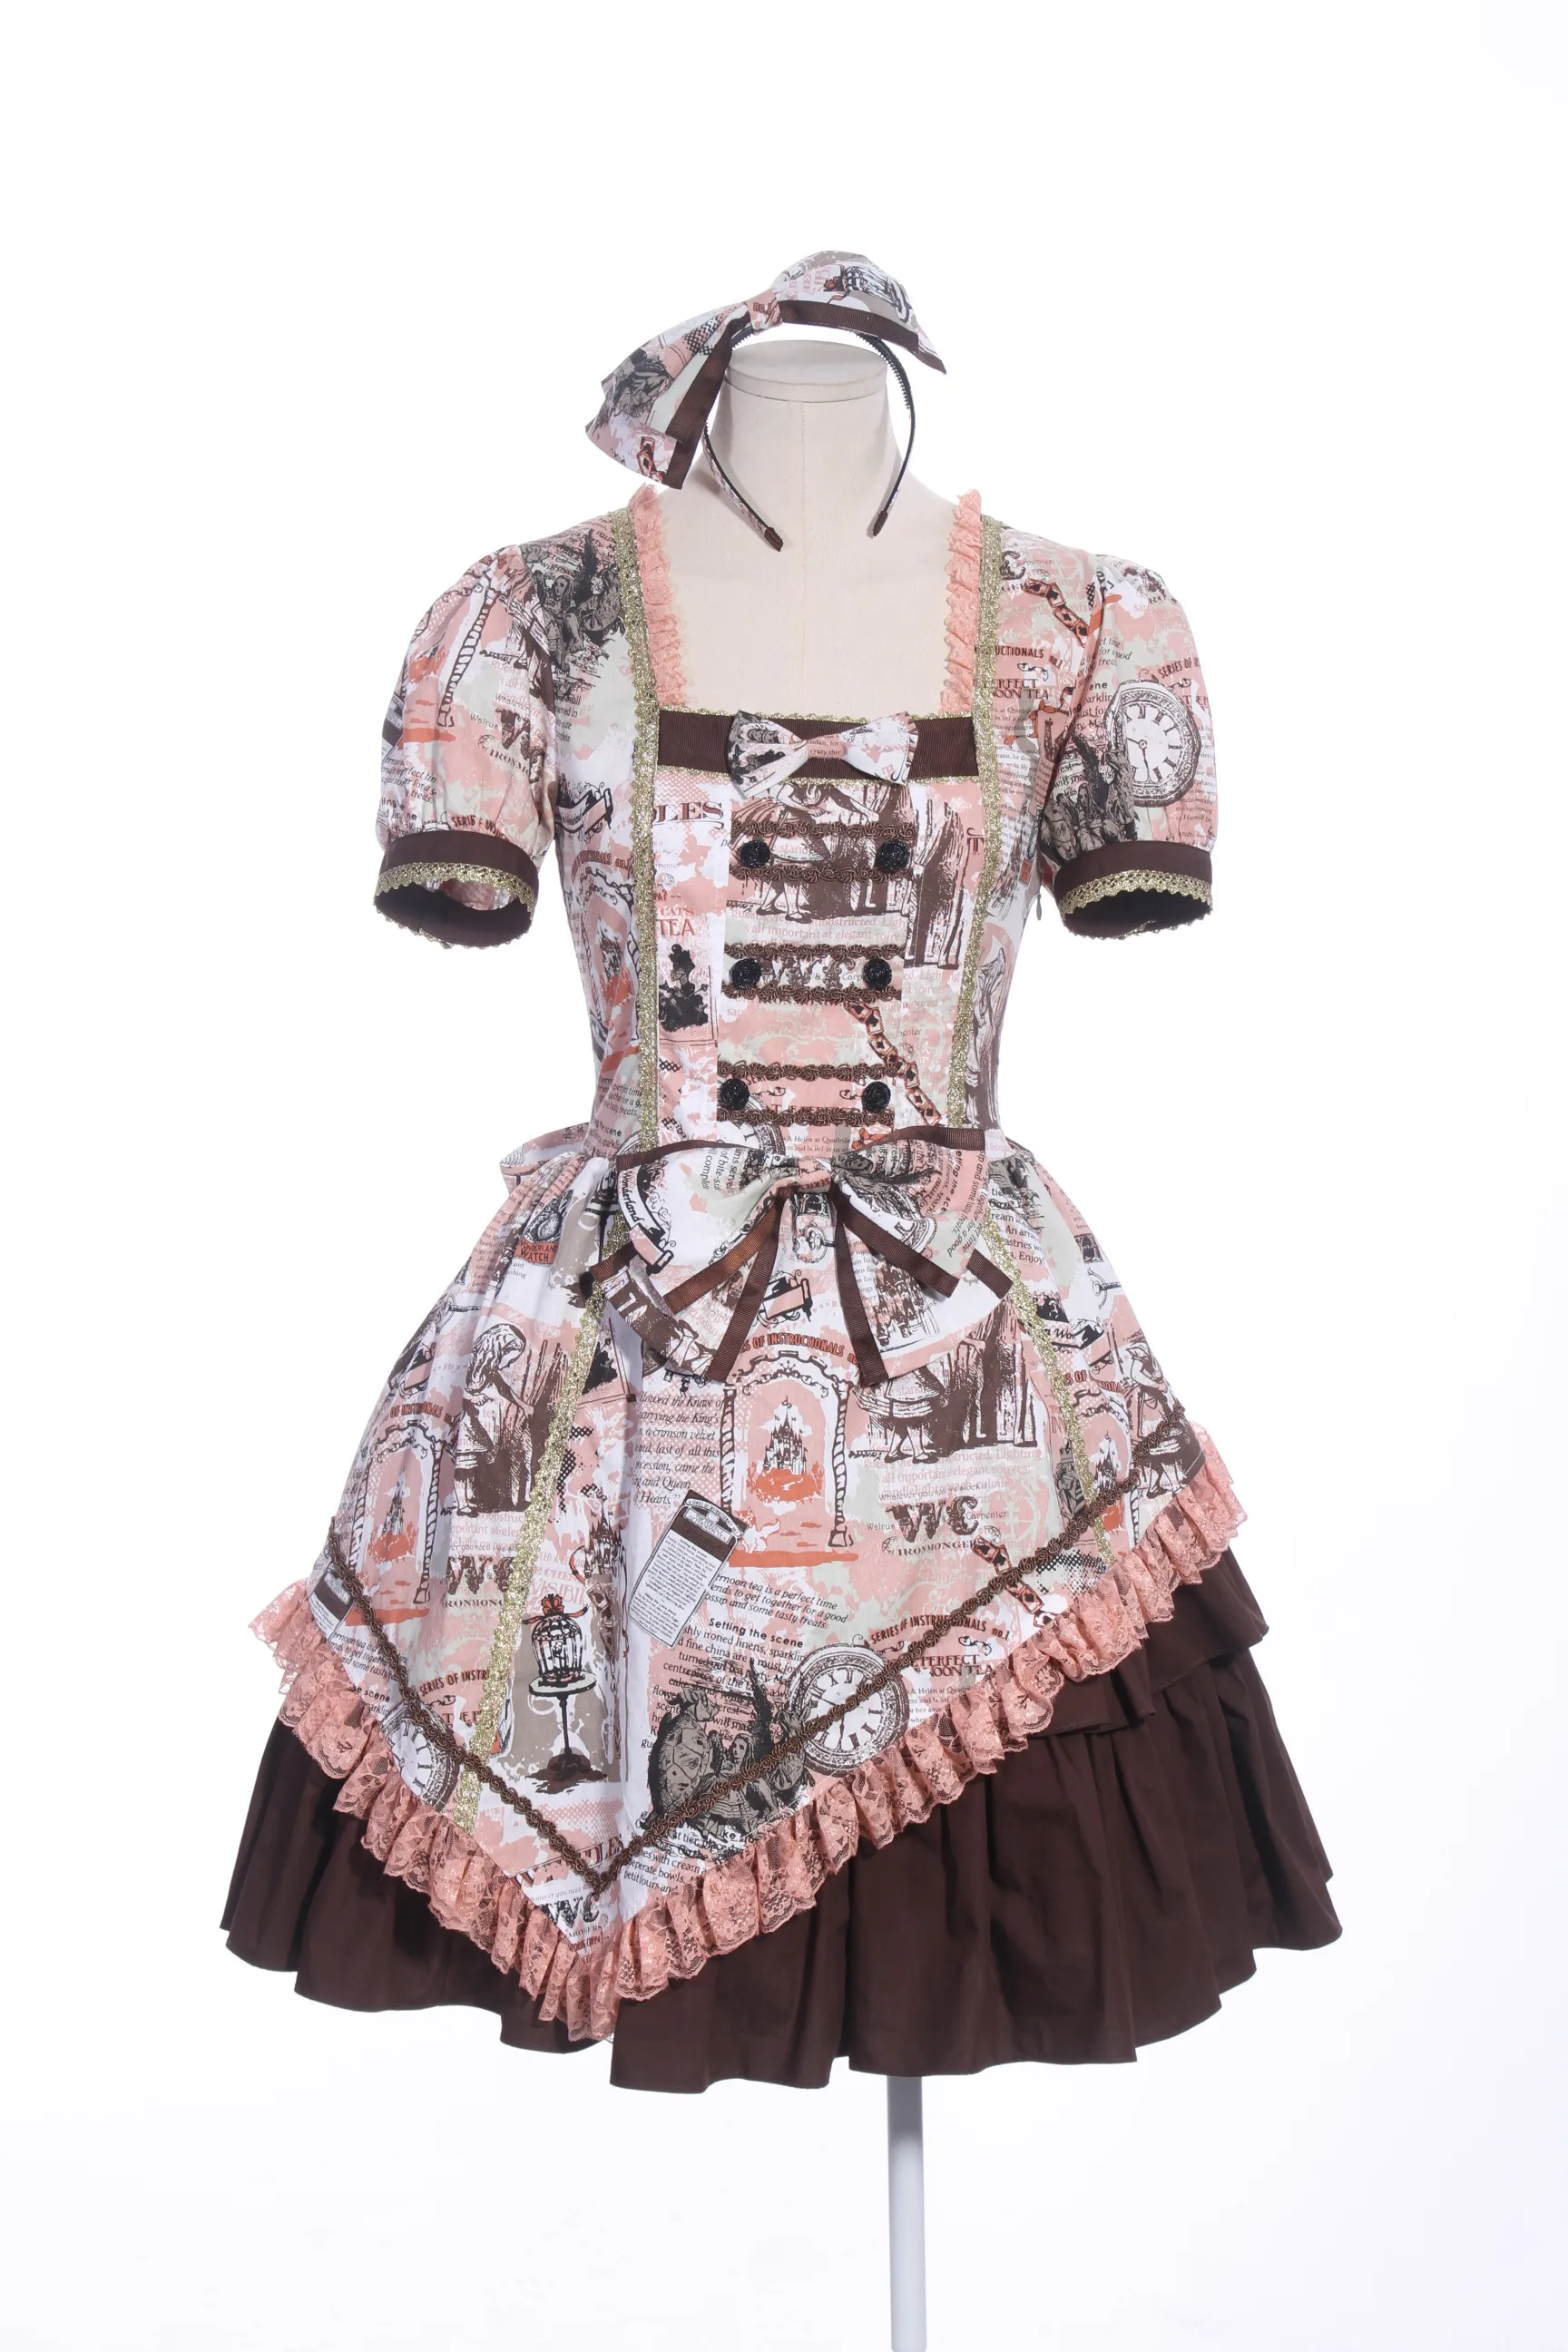 Sweet Lolita Dress Maid Costume Anime Cosplay Maid Uniform Plus Halloween Costumes for Women Dresses